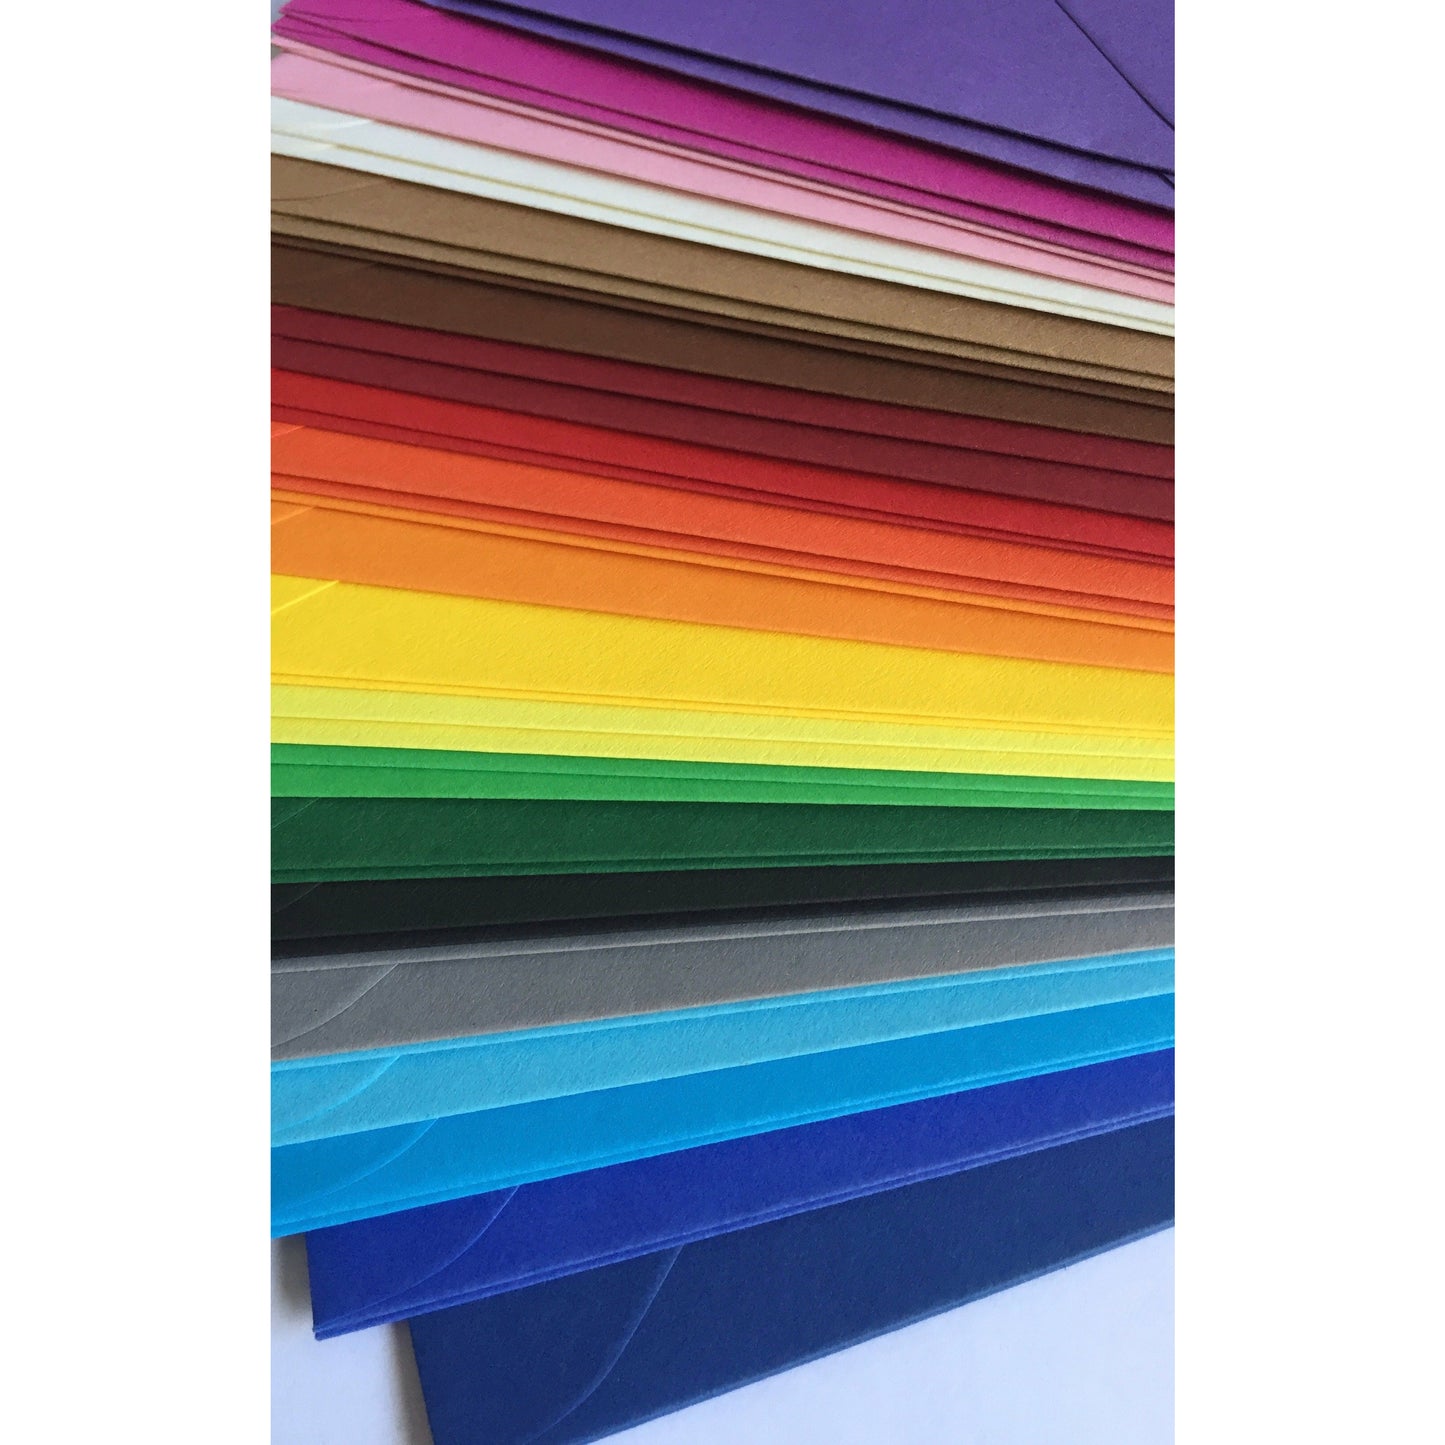 Coloured  Envelopes 11B ( 90x145mm) RSVP size